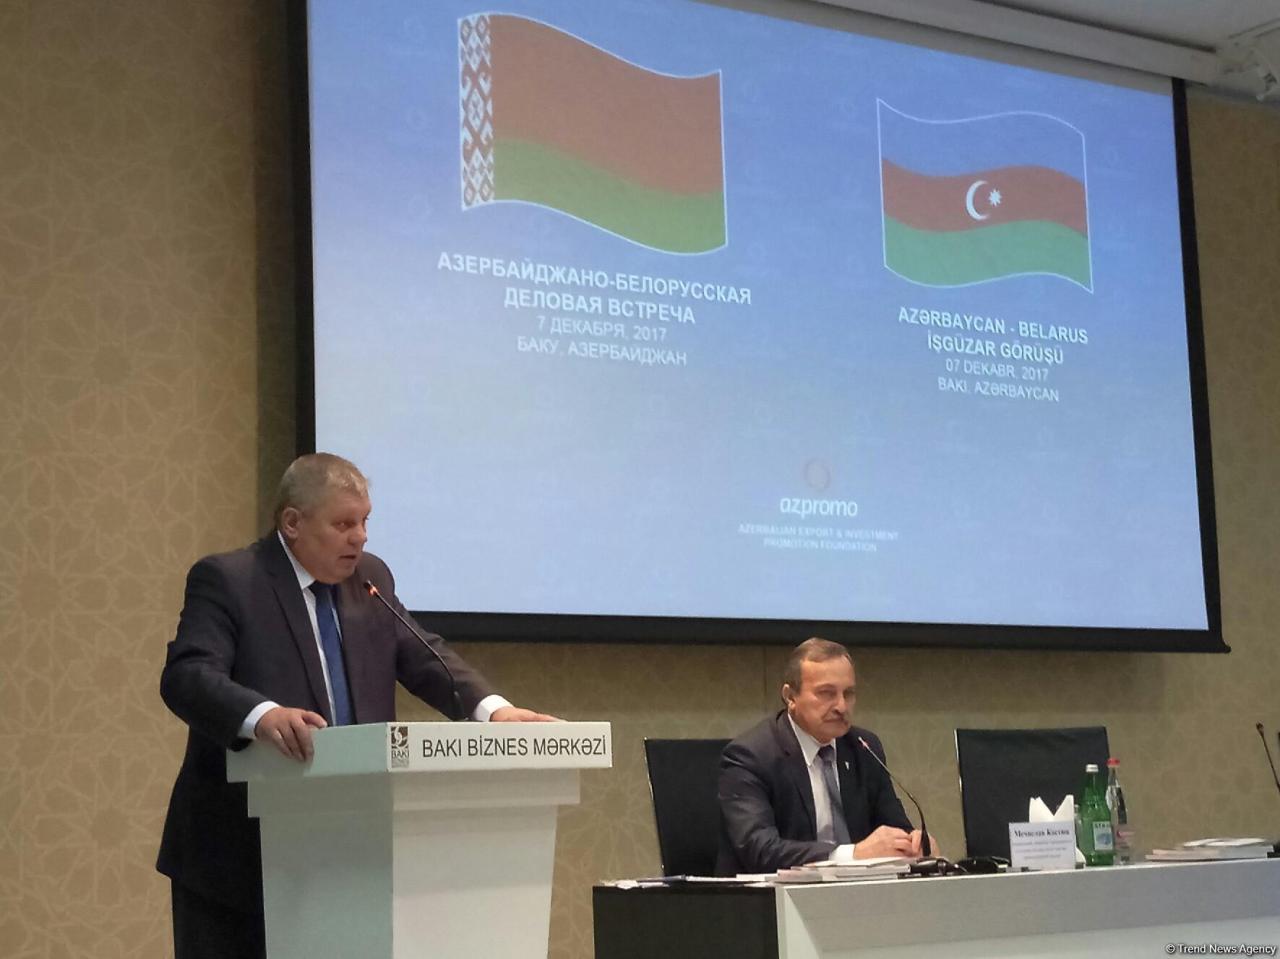 Over 60 companies with Azerbaijani capital operate in Belarus